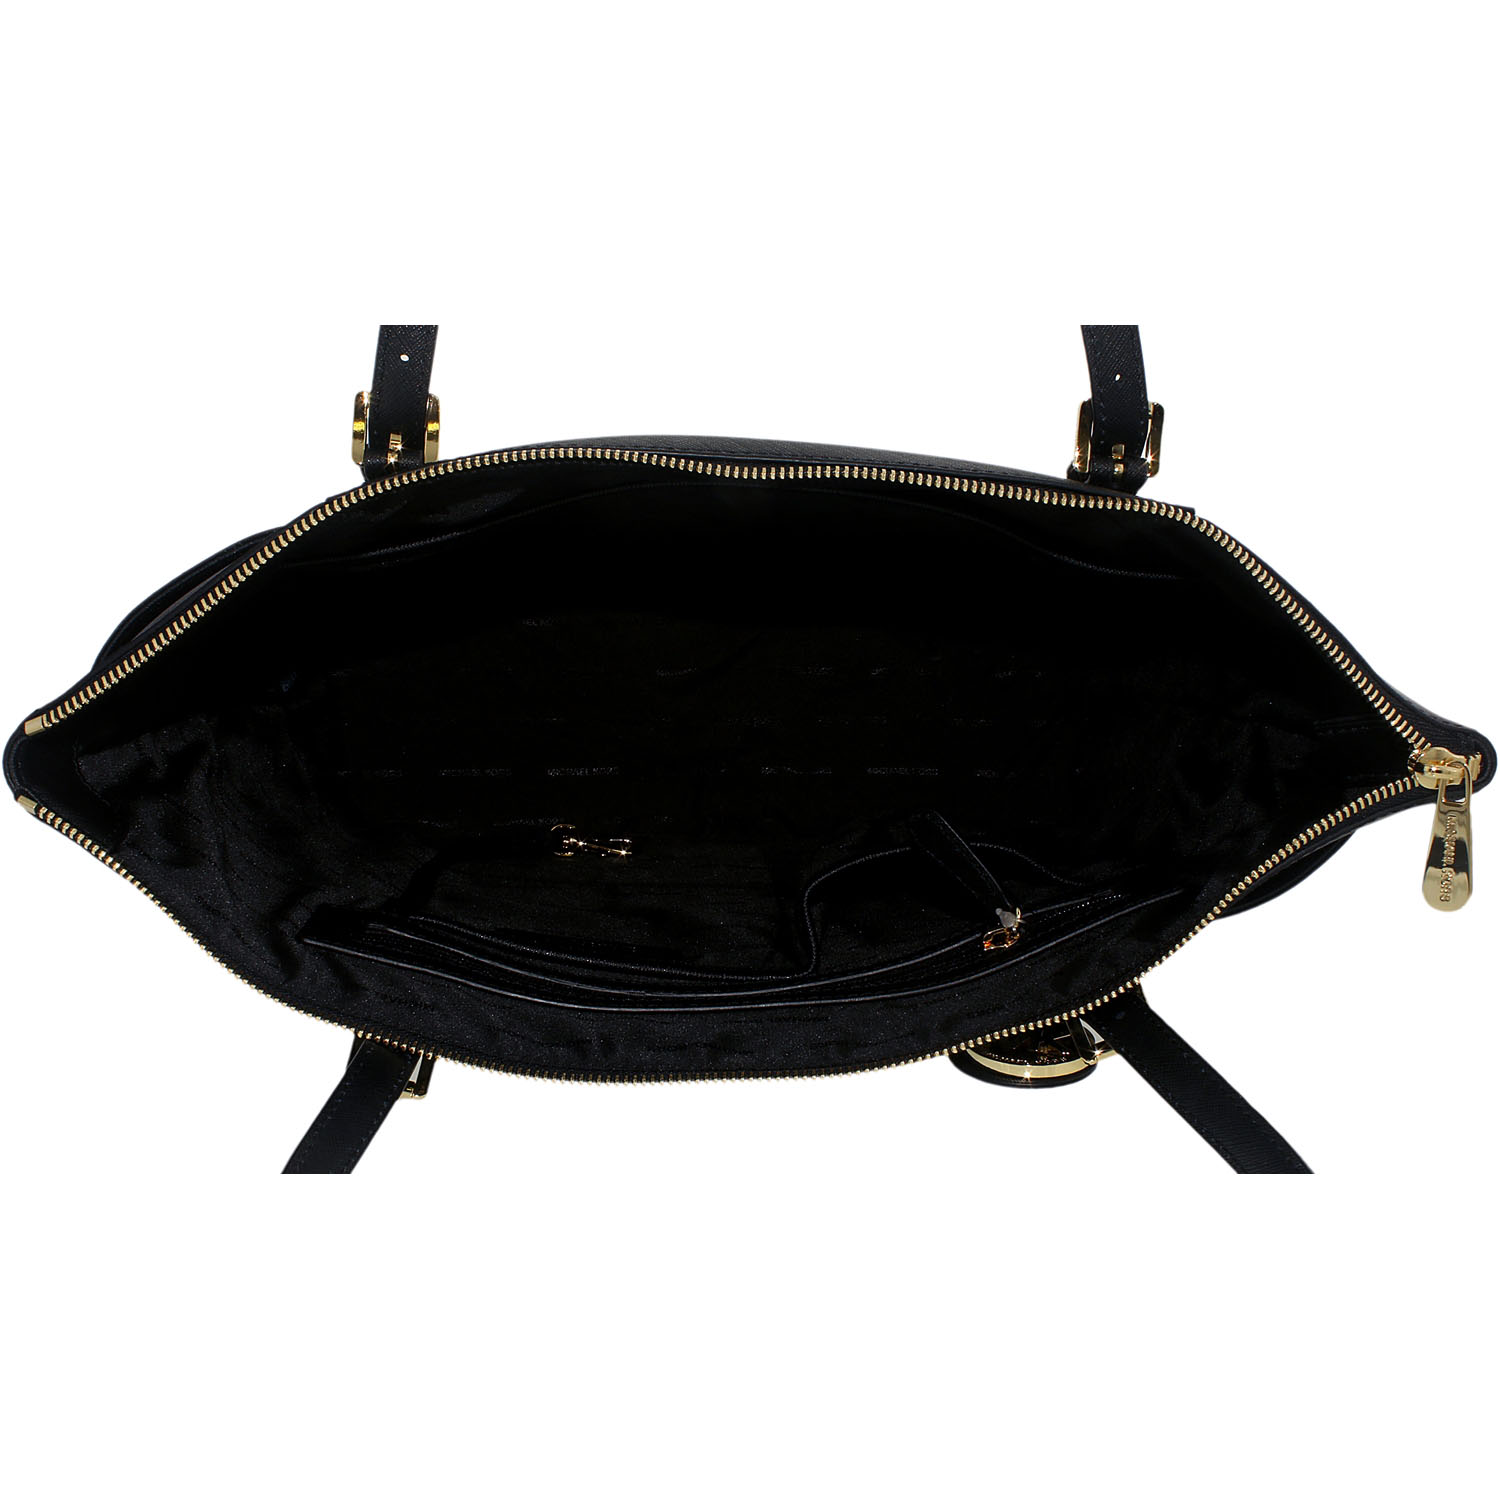 Michael Kors Jet Set Top Zip Saffiano Leather Large Tote Shoulder Bag Black # 30F4GTTT9L